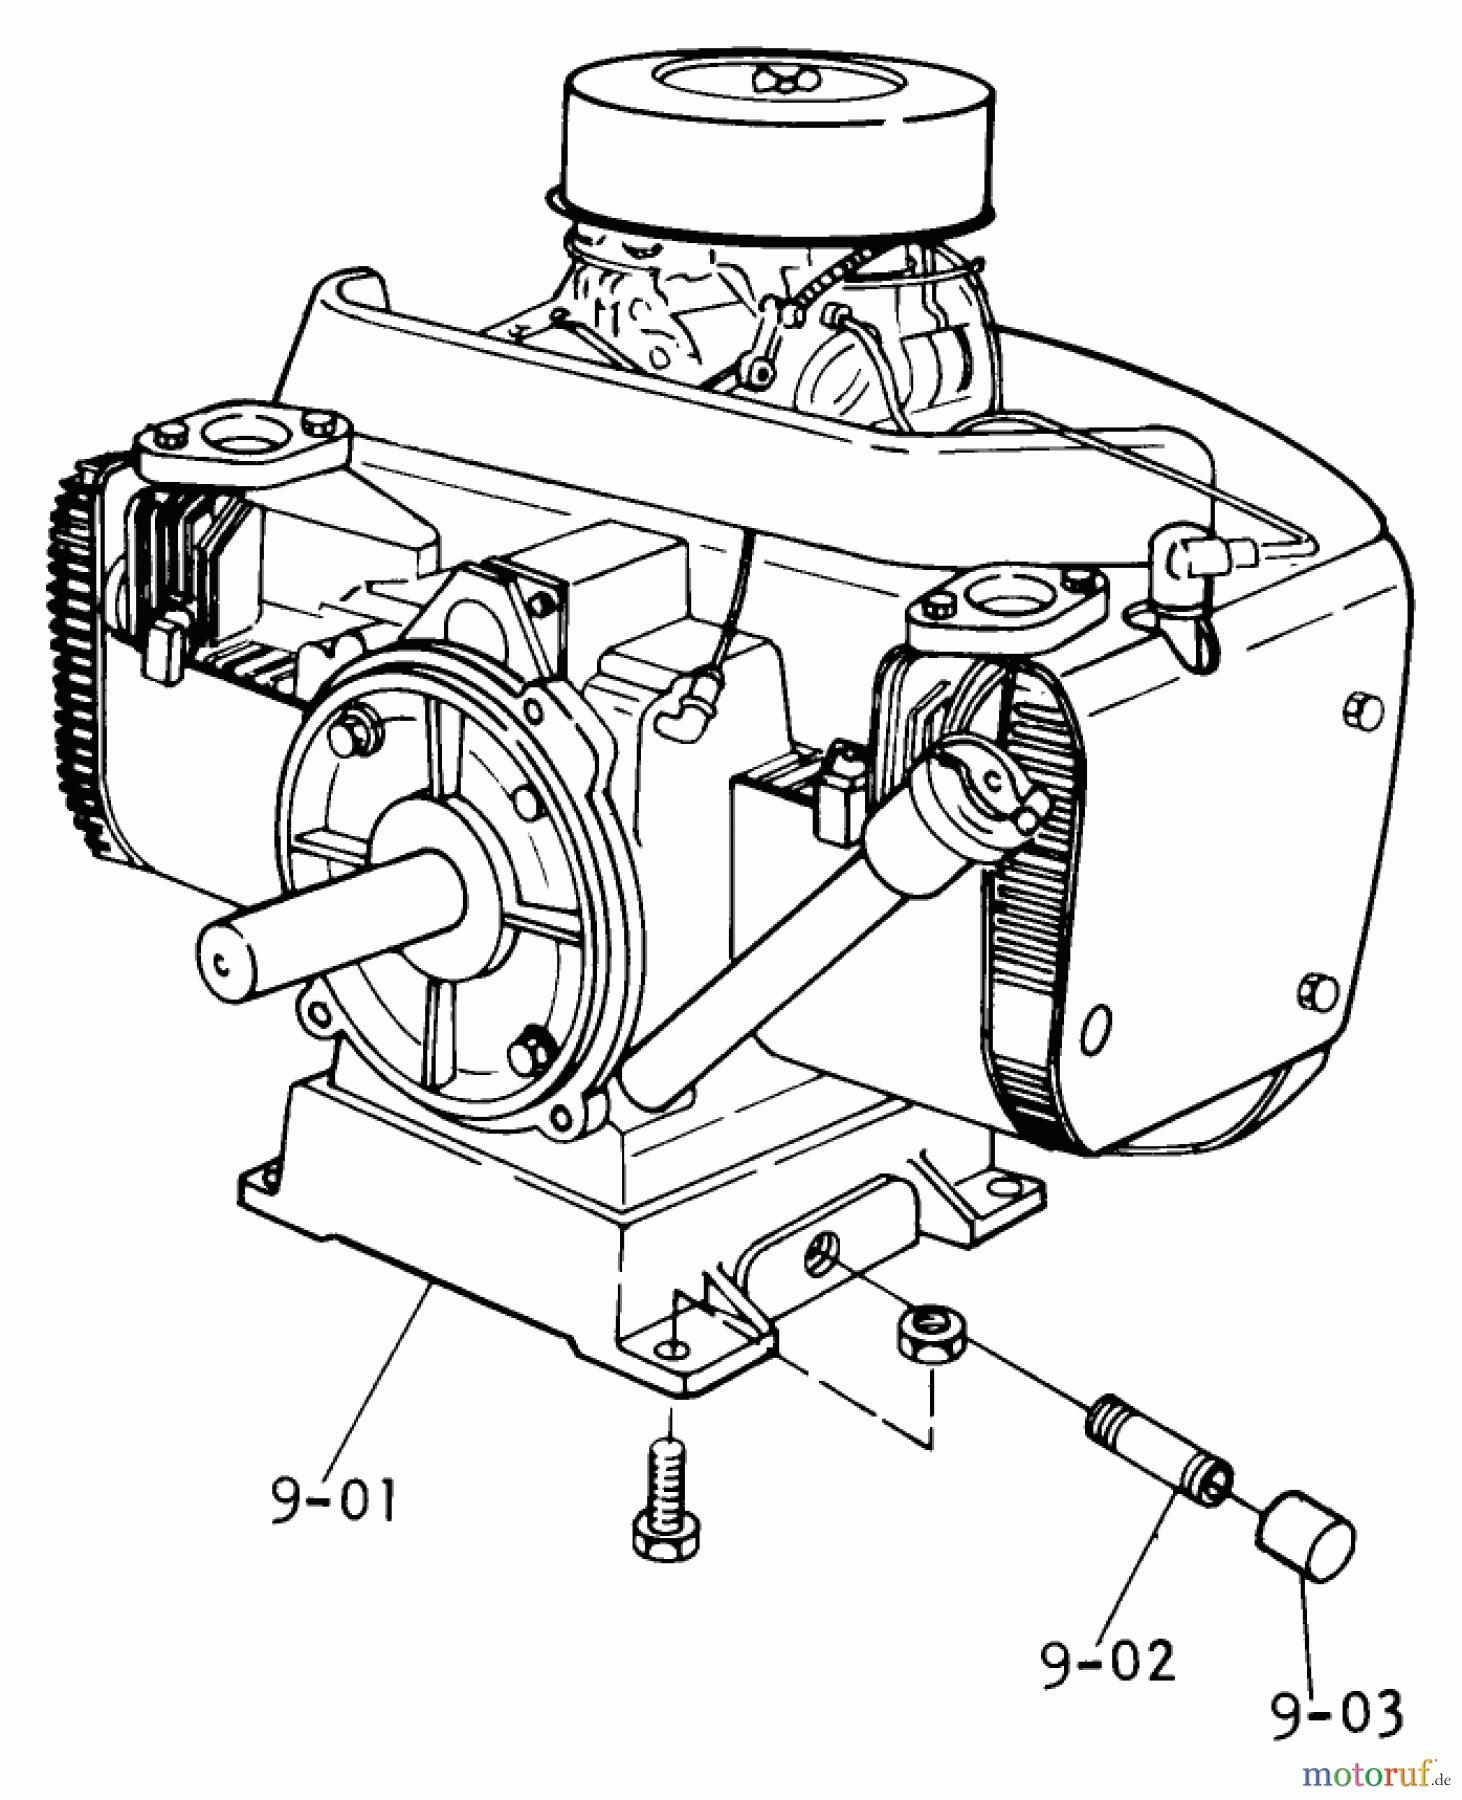  Toro Neu Mowers, Lawn & Garden Tractor Seite 1 1-0601 - Toro 18 hp AutomaticTractor, 1973 ENGINE